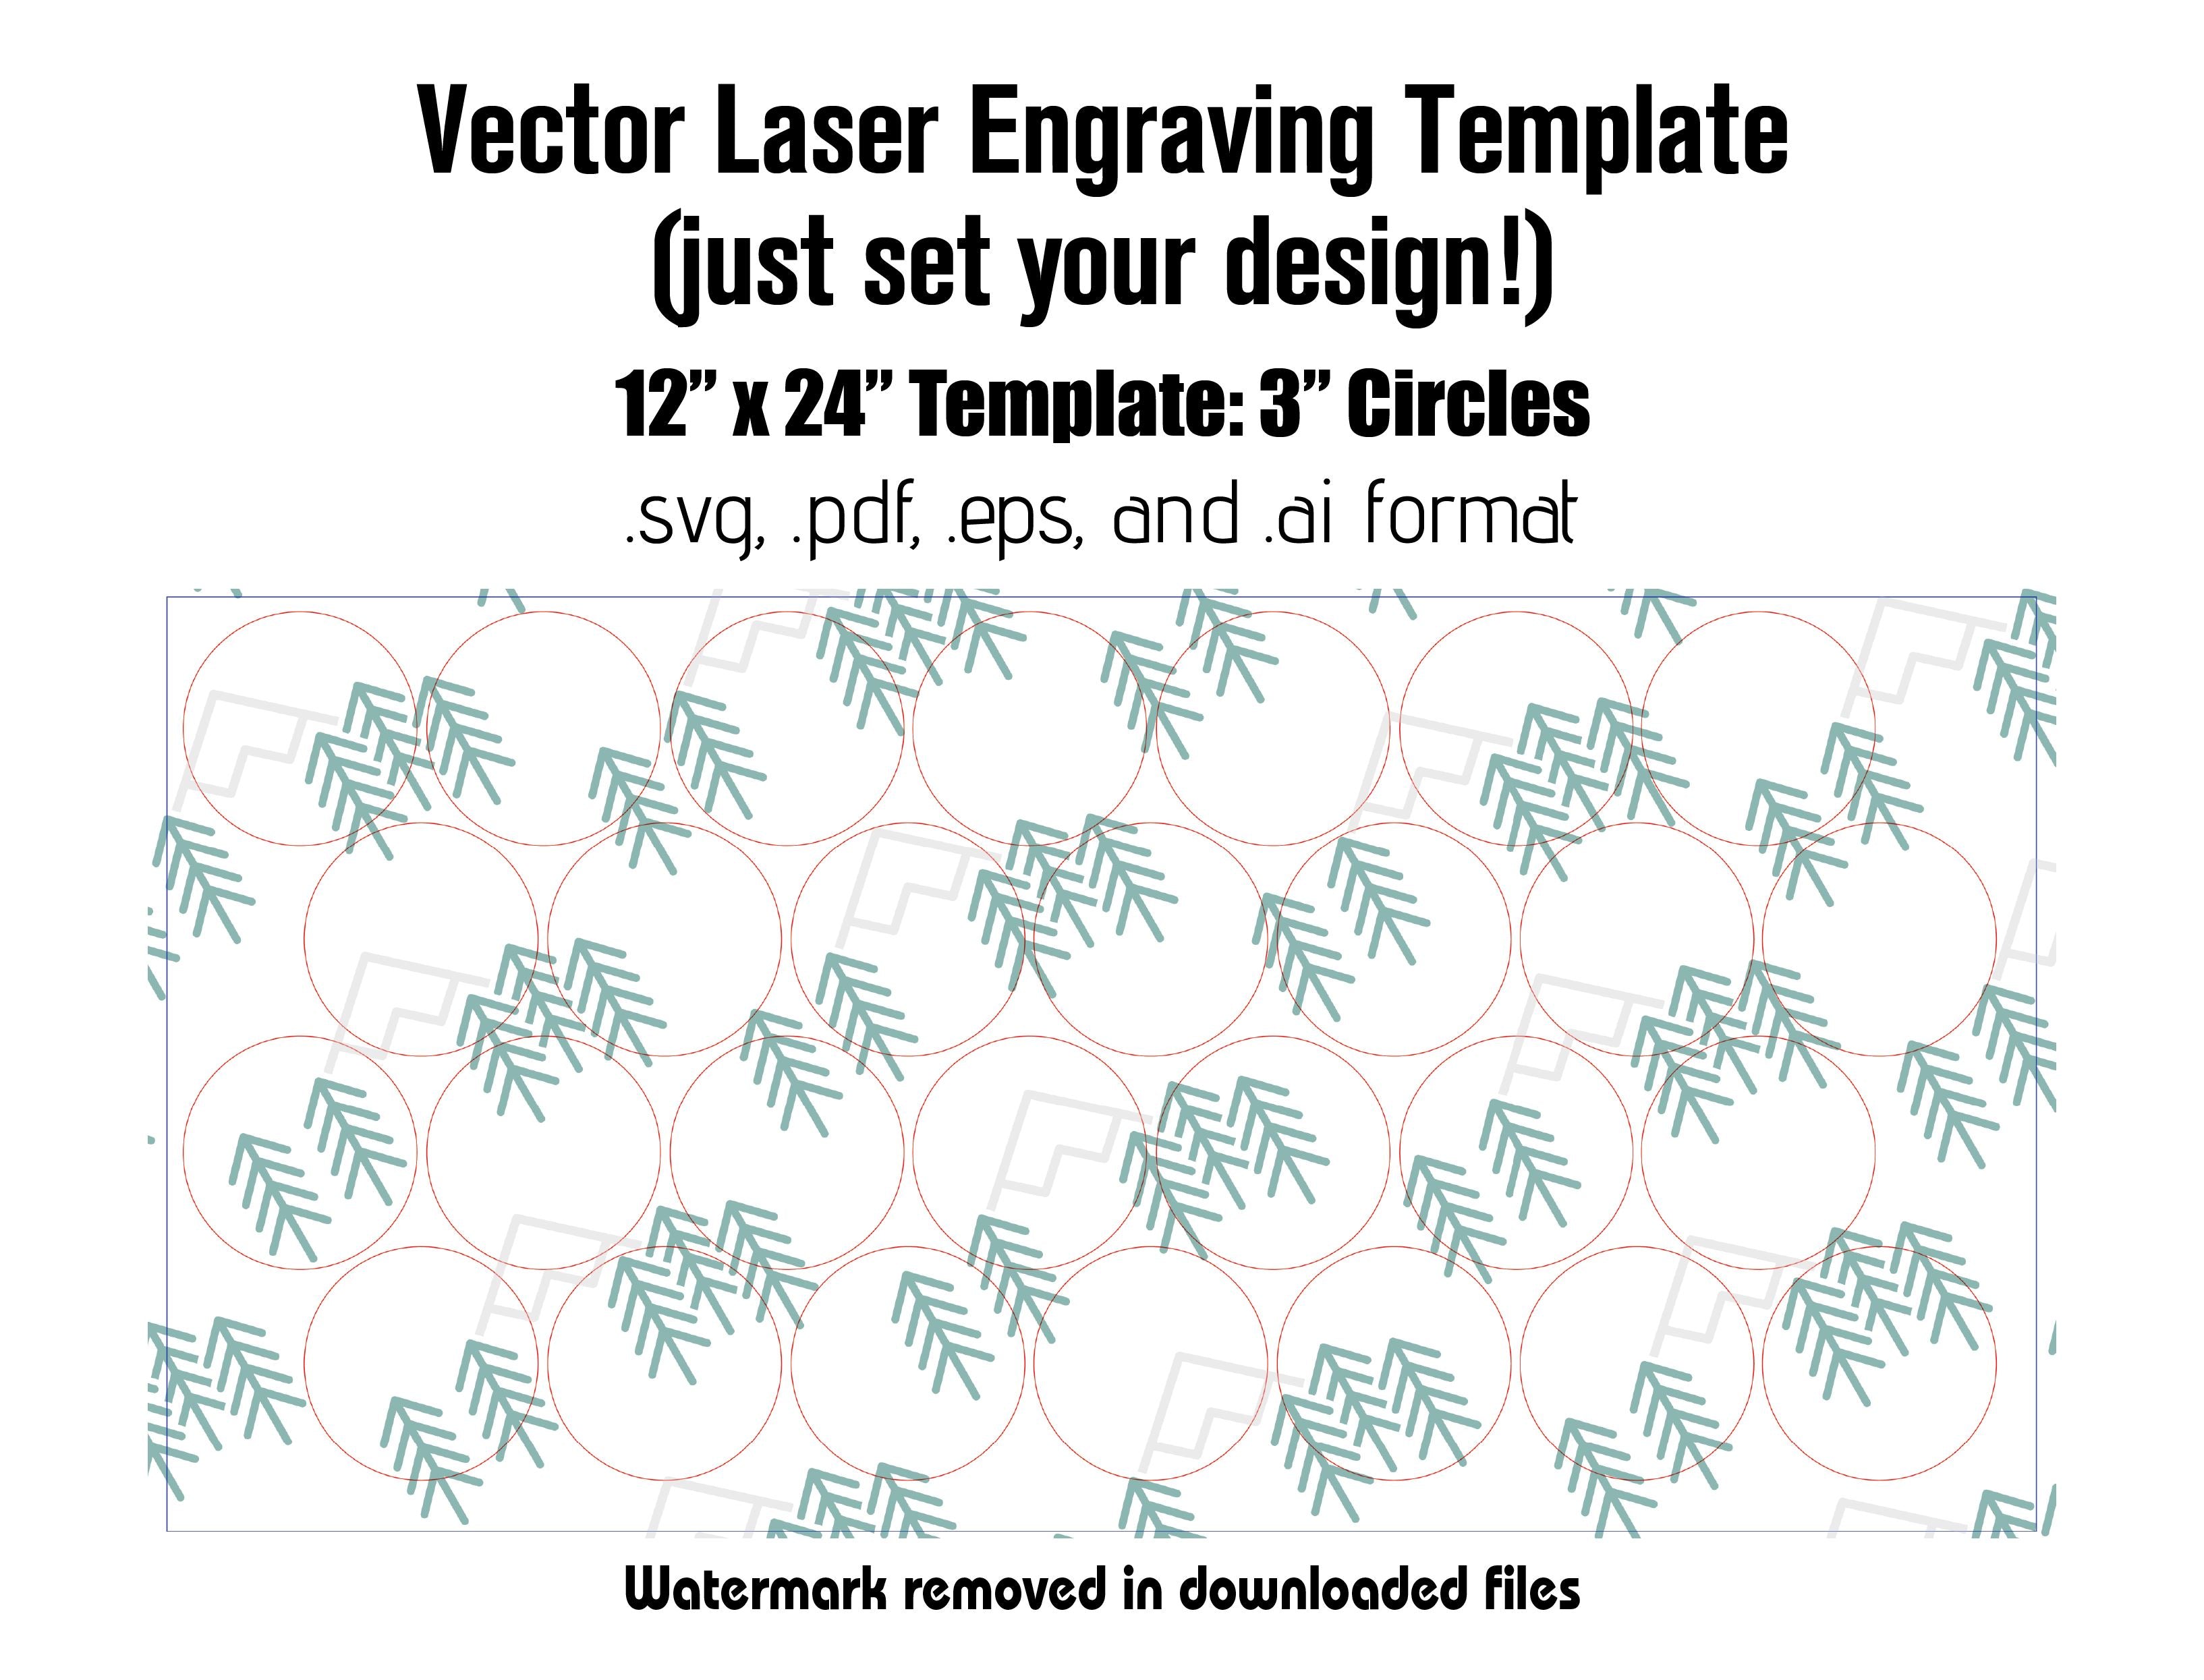 Digital Laser Cutting Template: 3" Circles - 12" x 24" Sheet Size Digital Laser Engraving Files Craftworks NW 